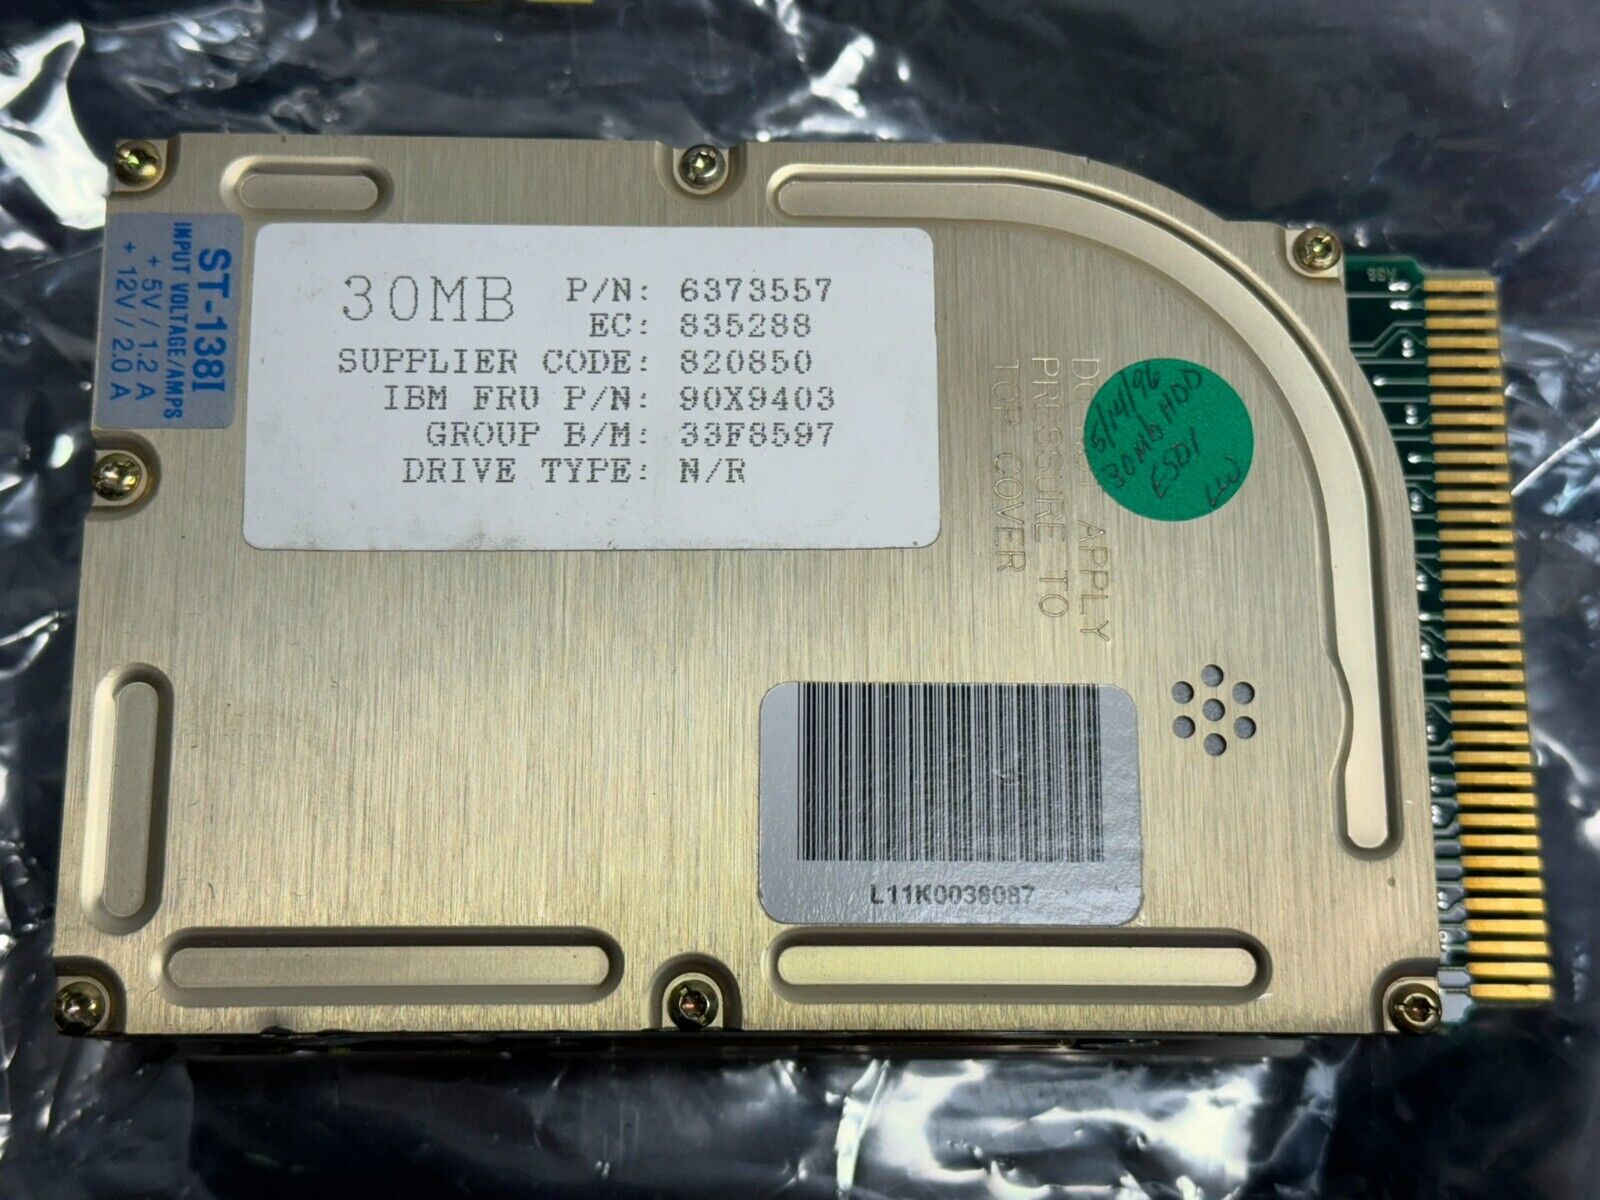 Seagate ST-138i 30 MB ESDI Hard Drive IBM FRU 90X9403 - 6373557